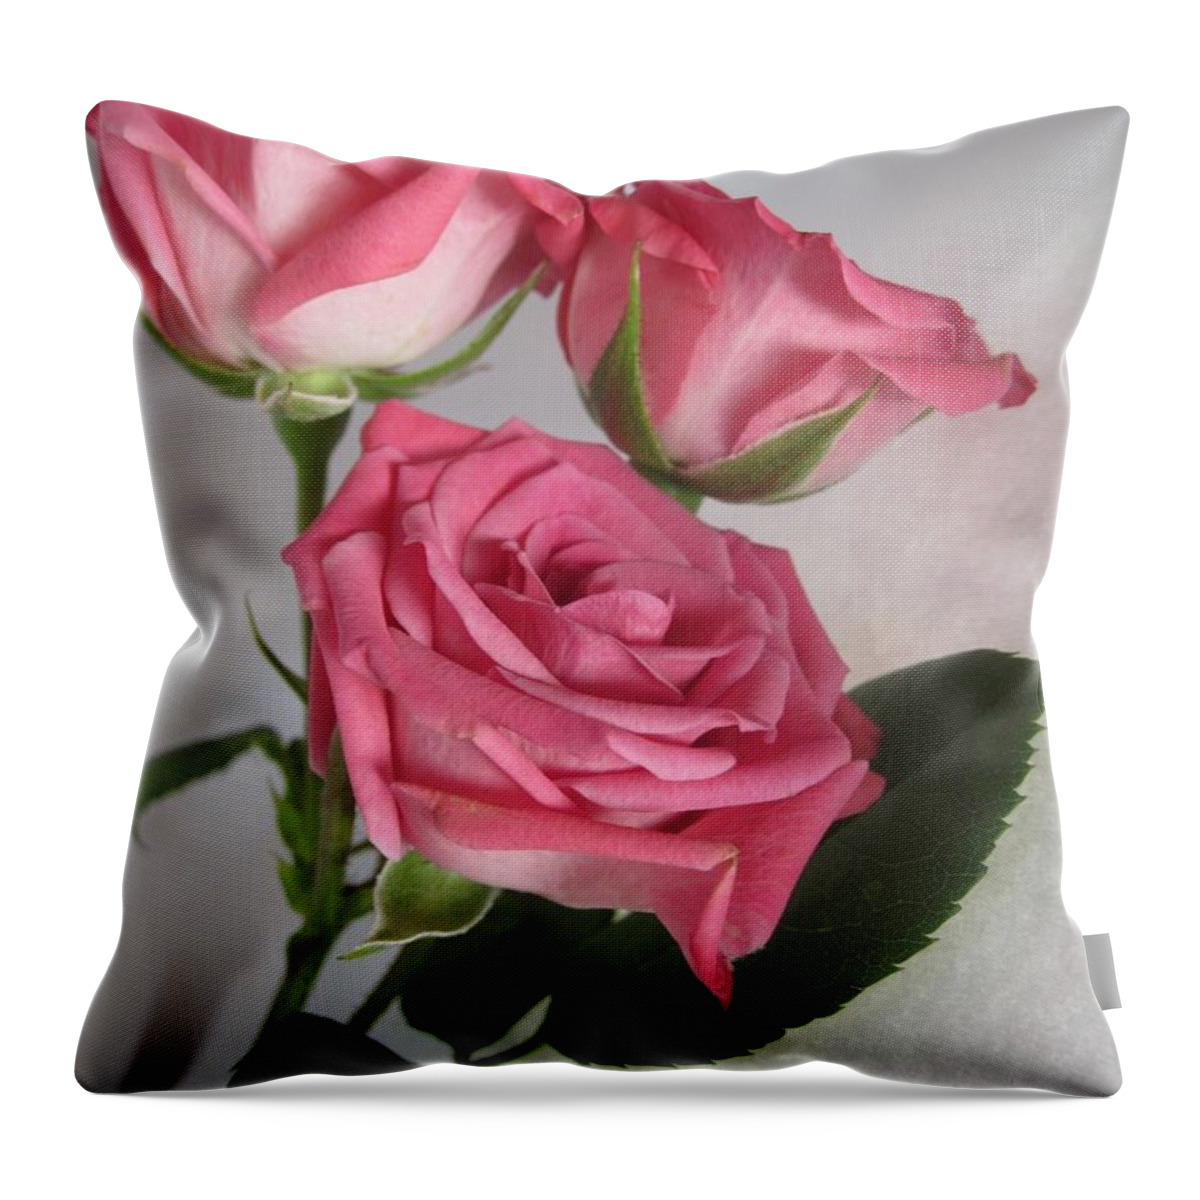 Floral Throw Pillow featuring the photograph Beautiful Pink Roses 8 by Tara Shalton